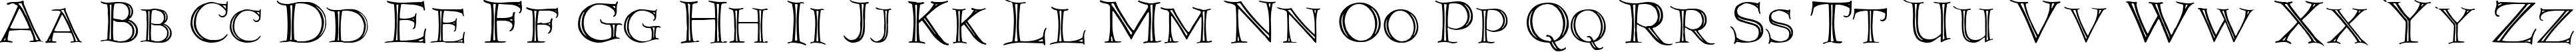 Пример написания английского алфавита шрифтом Priory